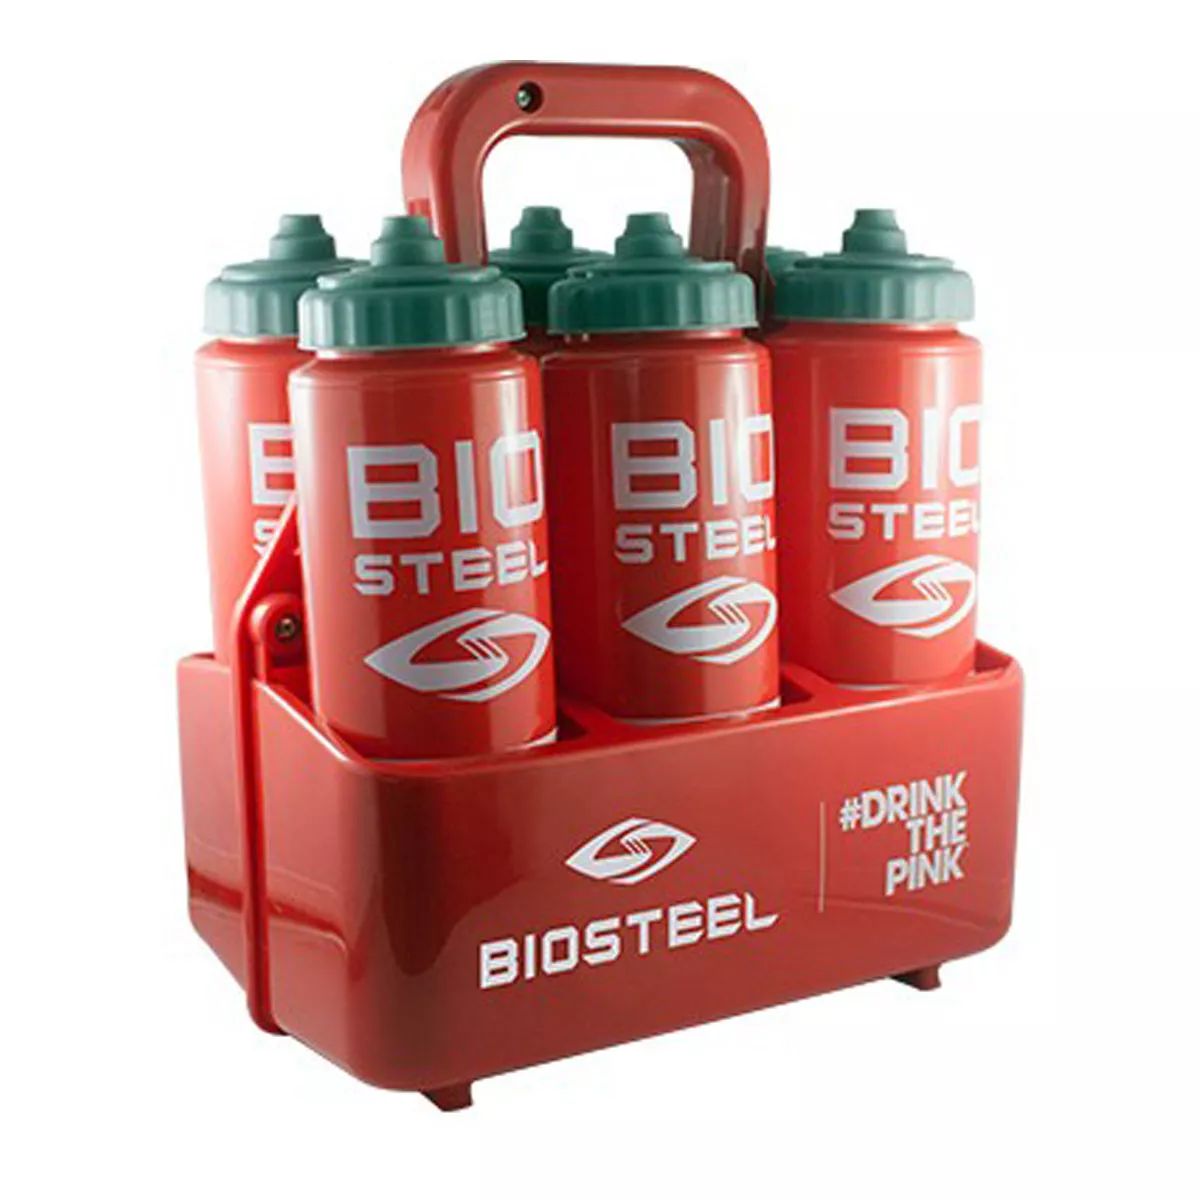 Biosteel Spouted water bottle carrying case